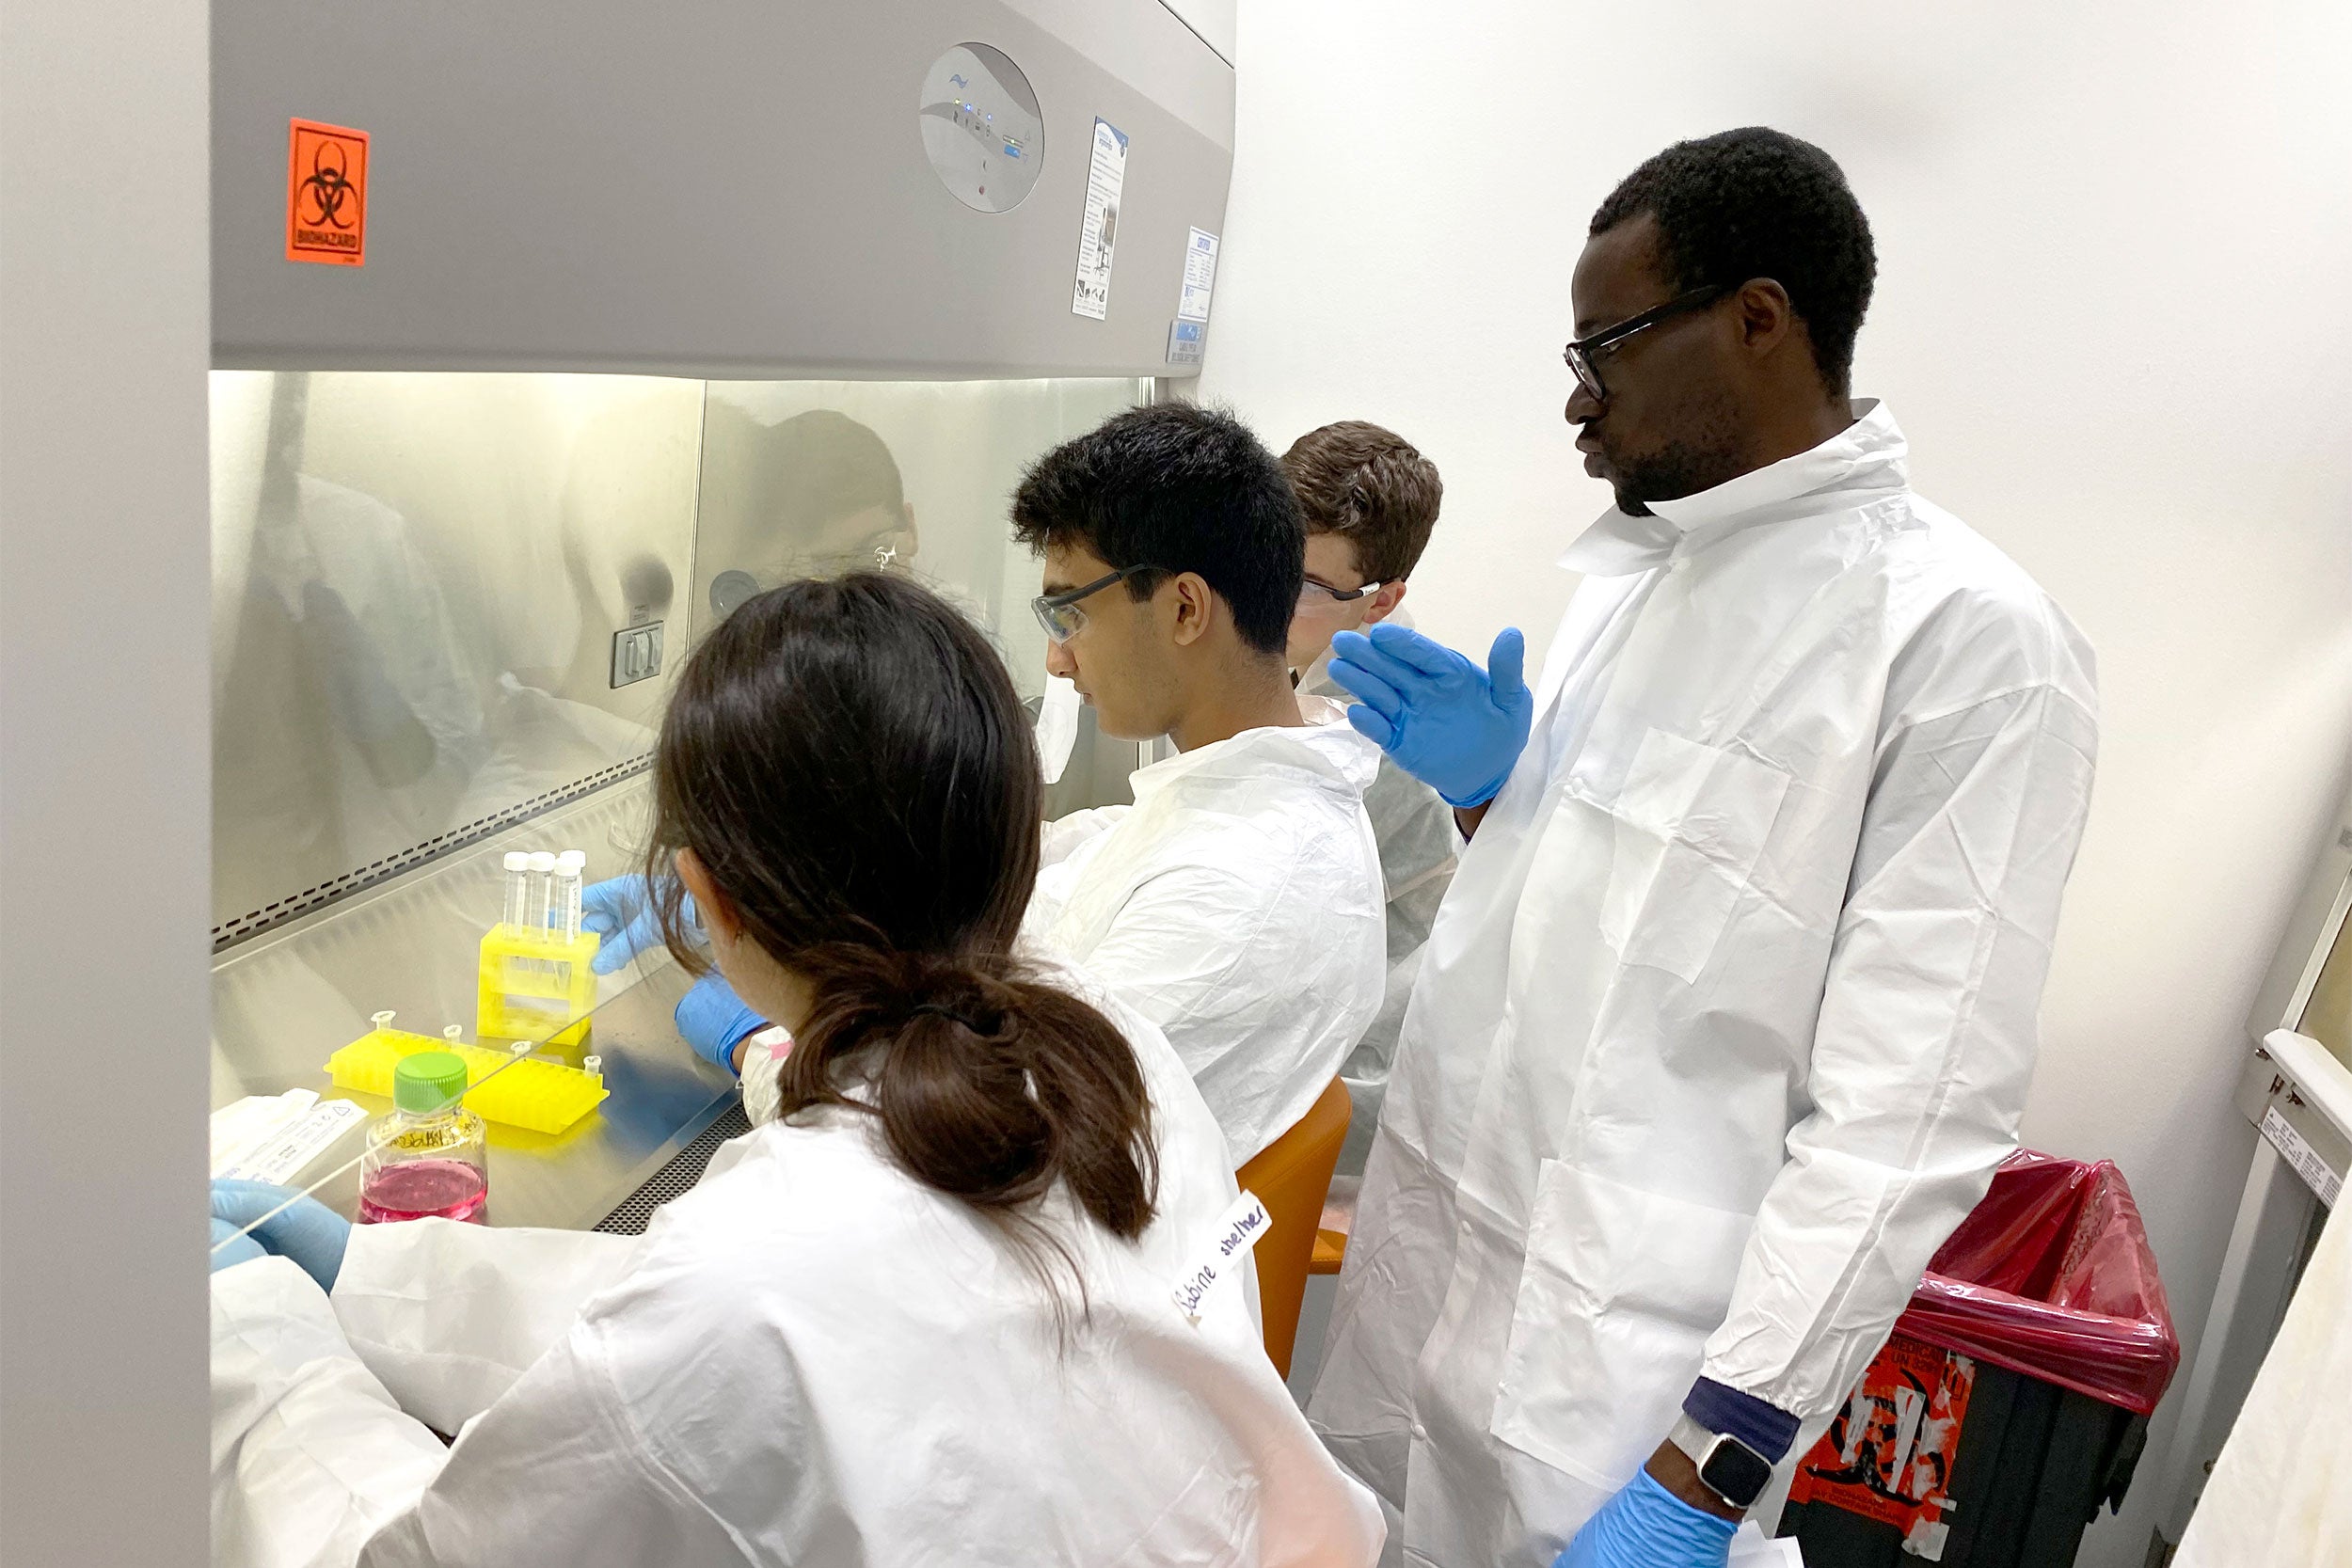 Postdoc instructioning high school students in a lab.